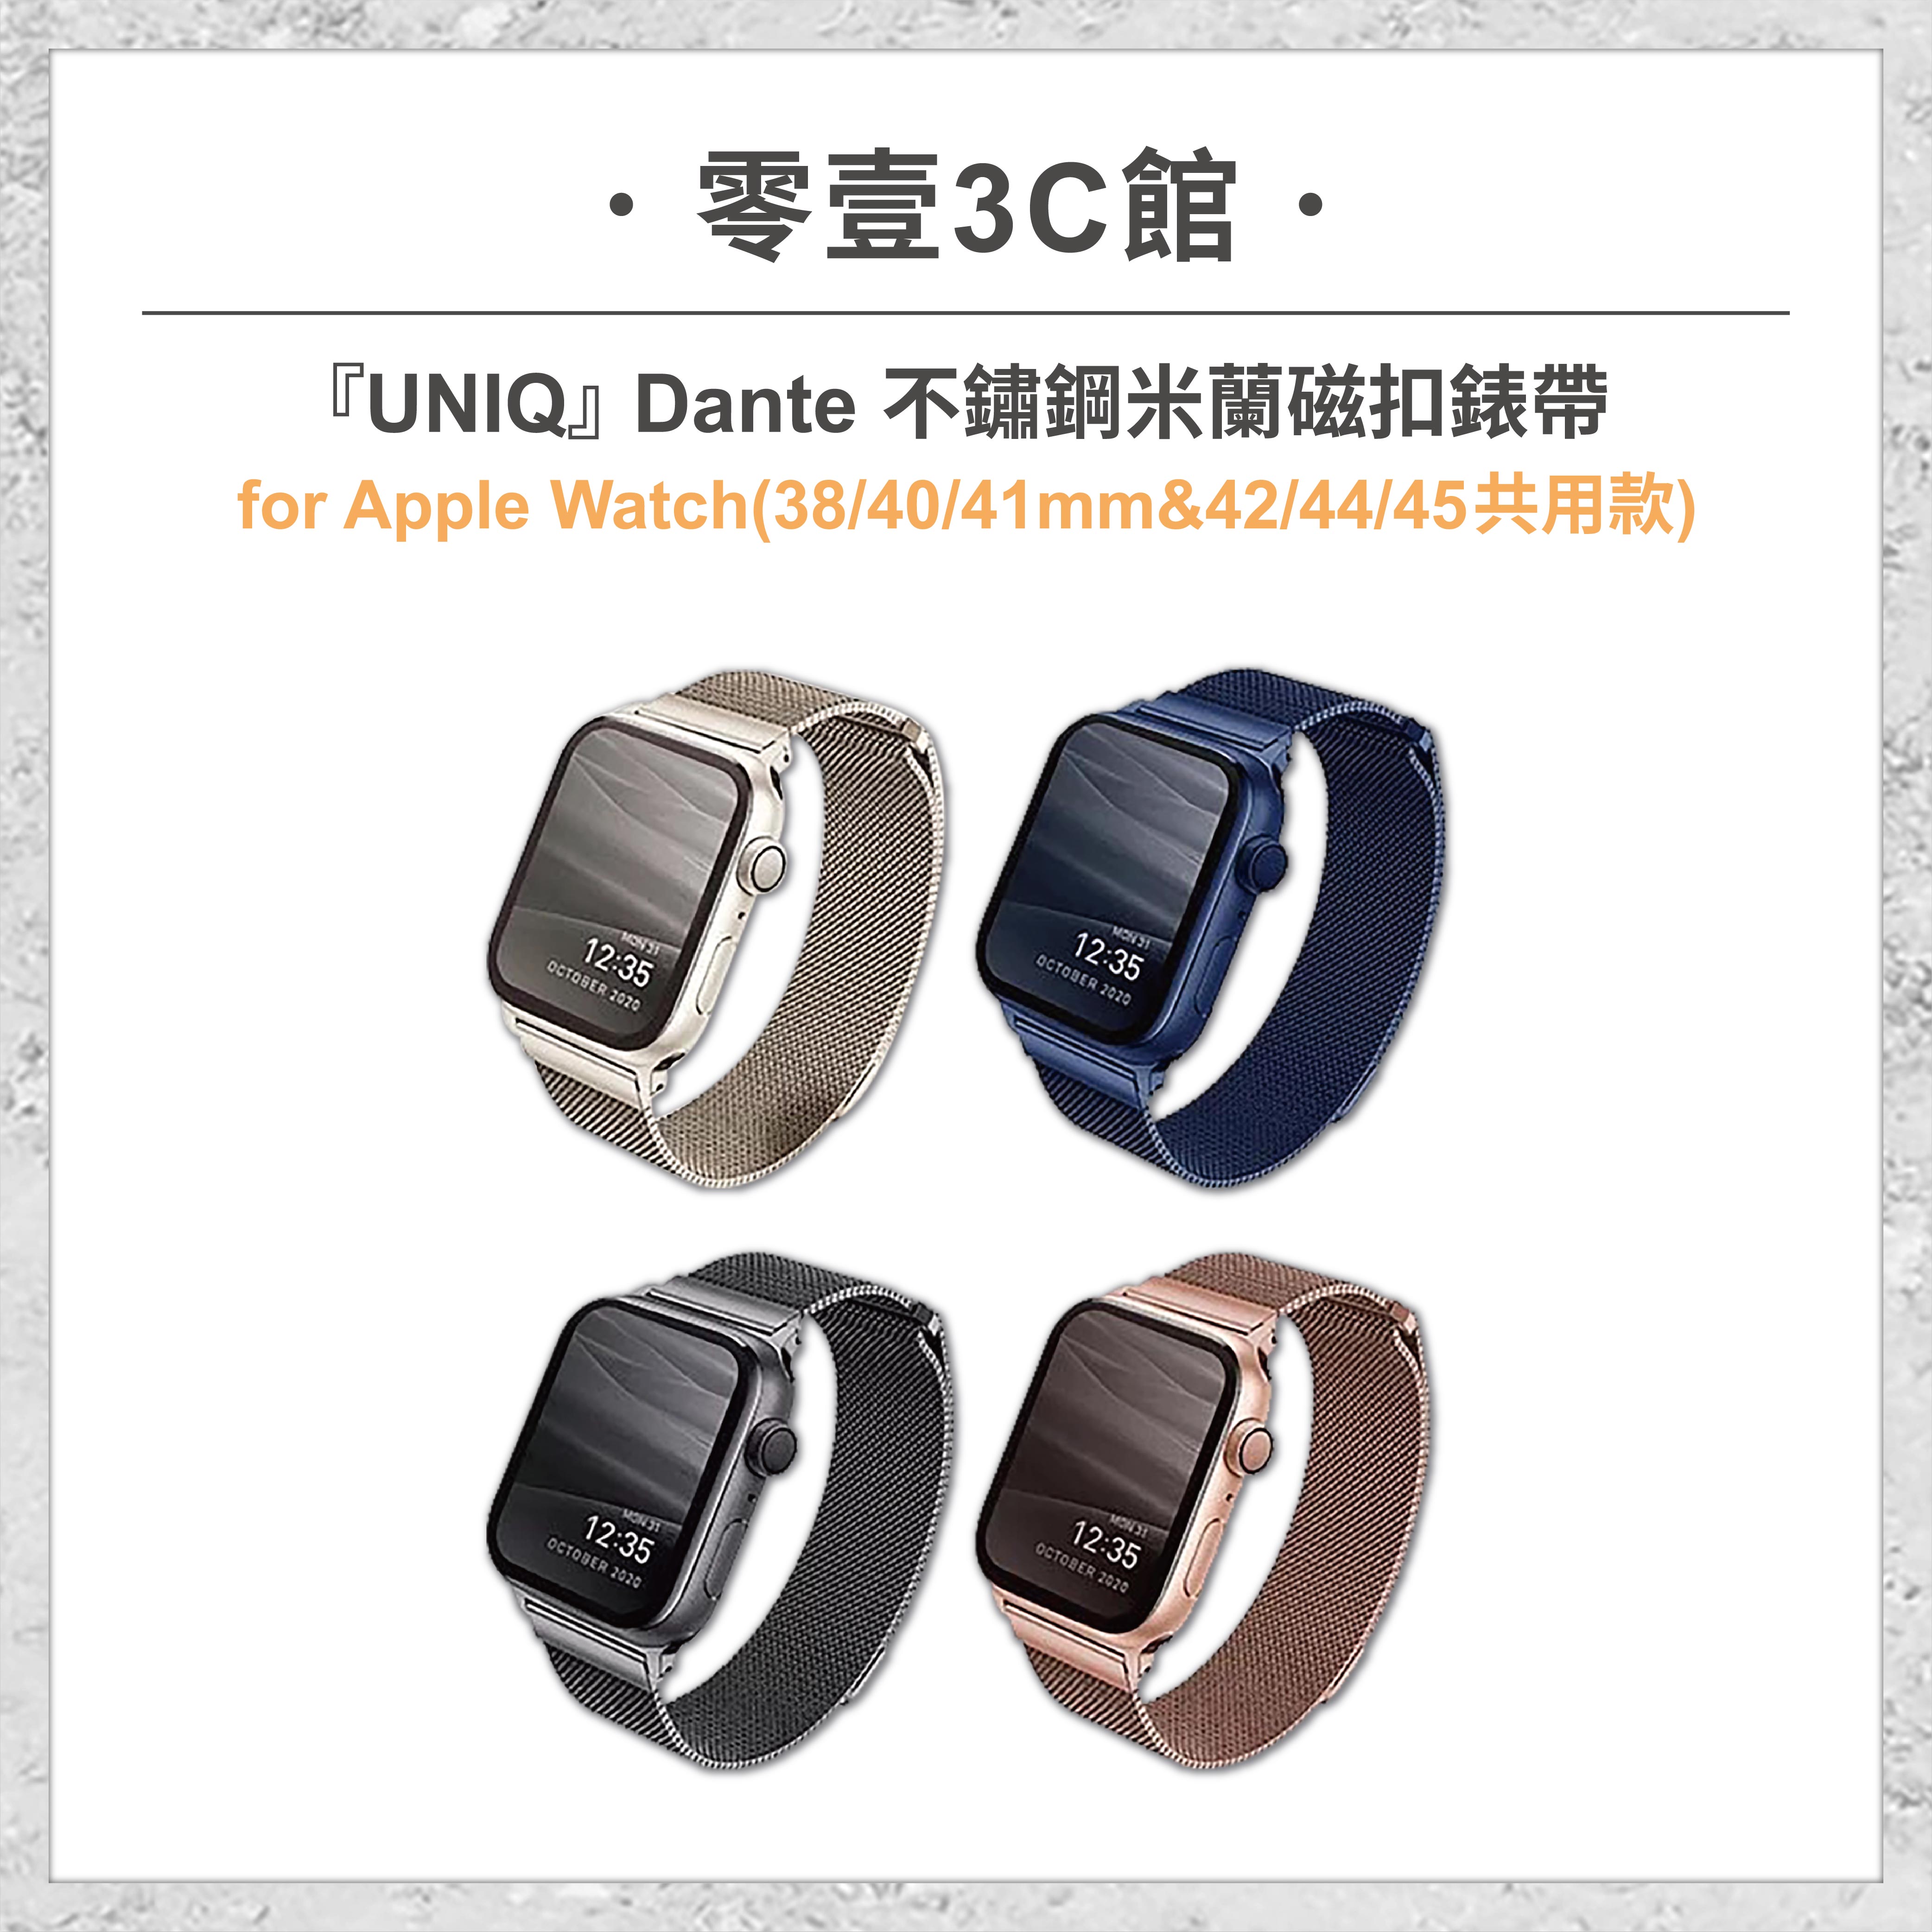 『UNIQ』Dante 不鏽鋼米蘭磁扣錶帶for Apple Watch (38/40/41&42/44/45/mm共用款) 手錶保護殼